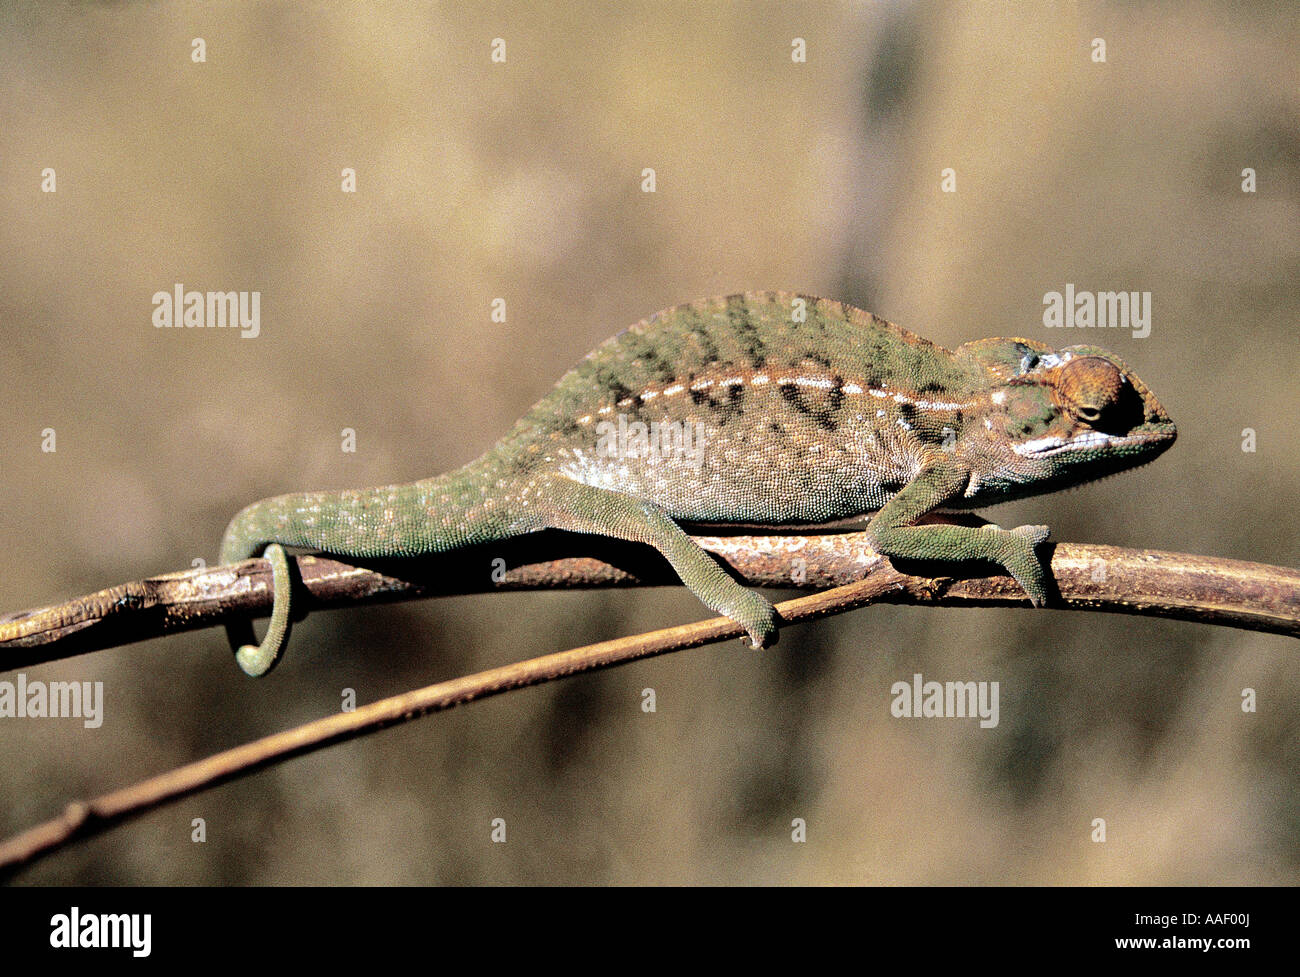 Chameleon Ambalavao usando su cola prensil para agarrar centrales de Madagascar Foto de stock